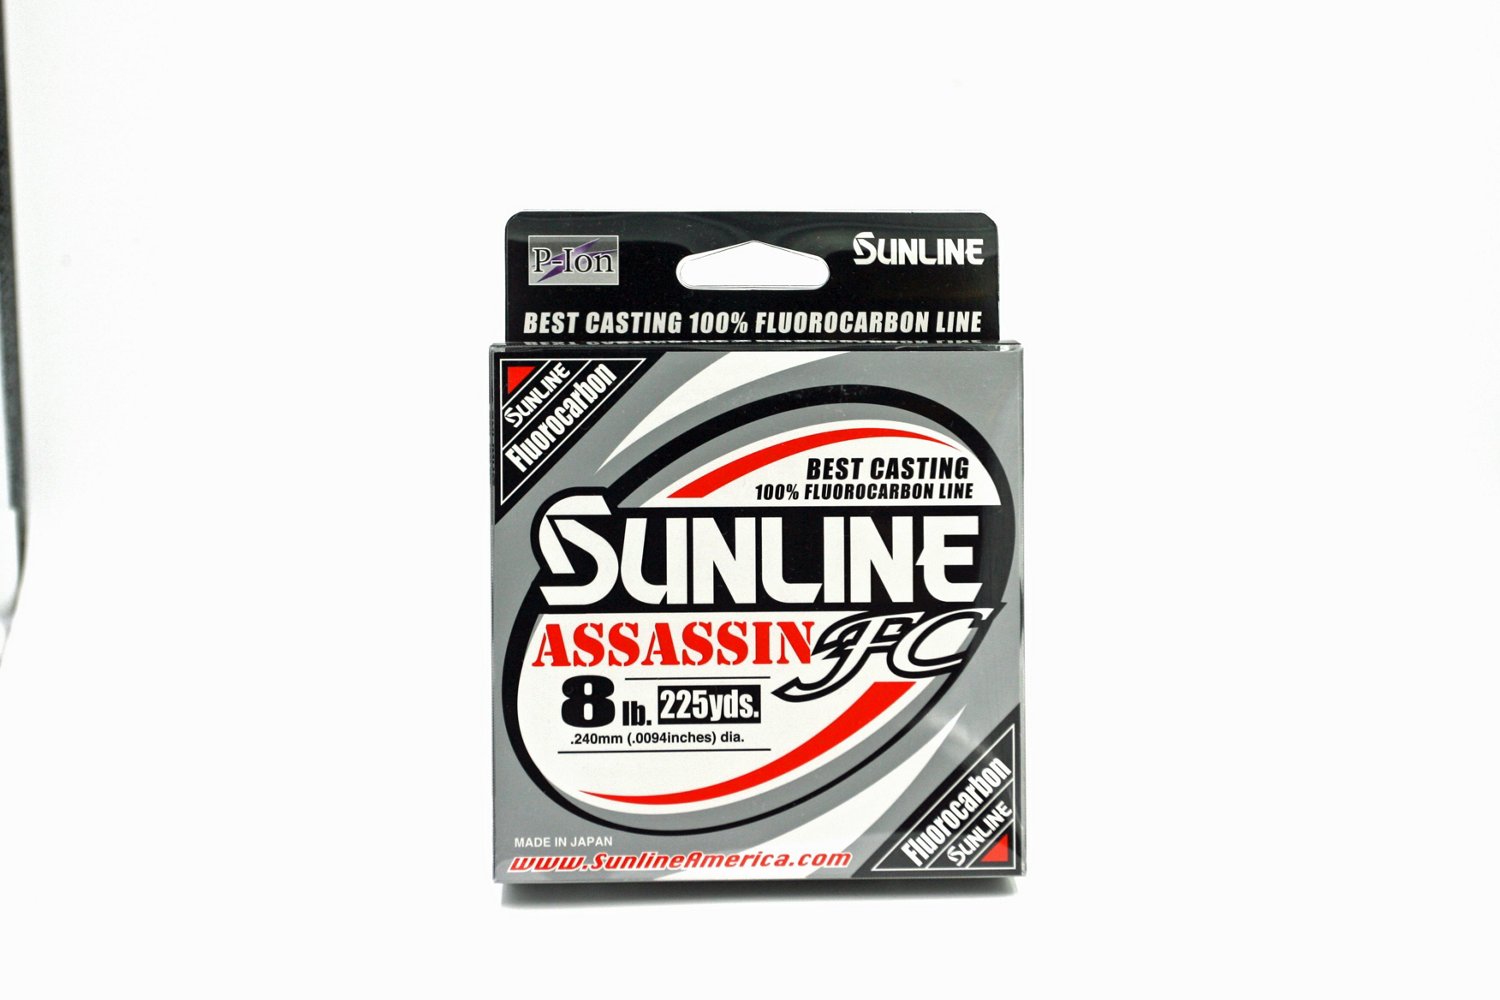 Sunline Assassin FC 8 lb - 225 yd Fluorocarbon Fishing Line